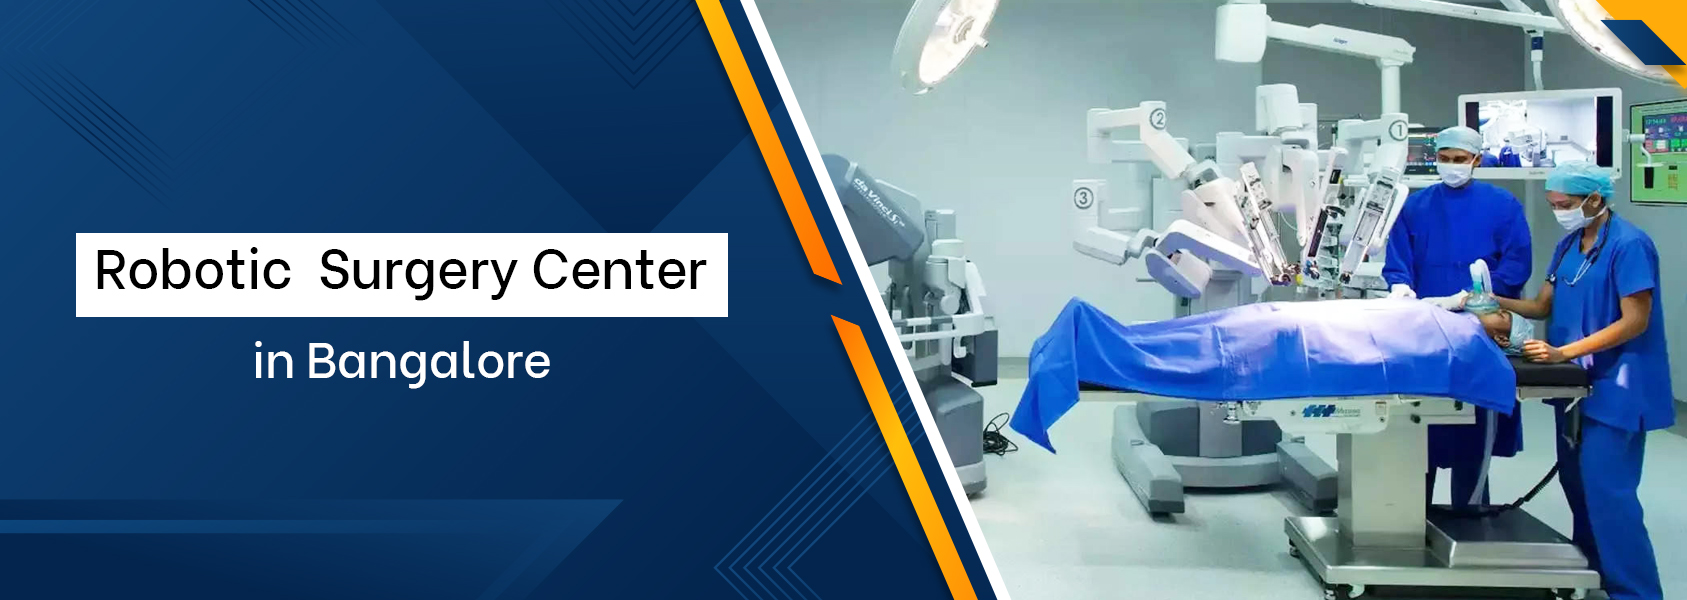 Robotic surgery center